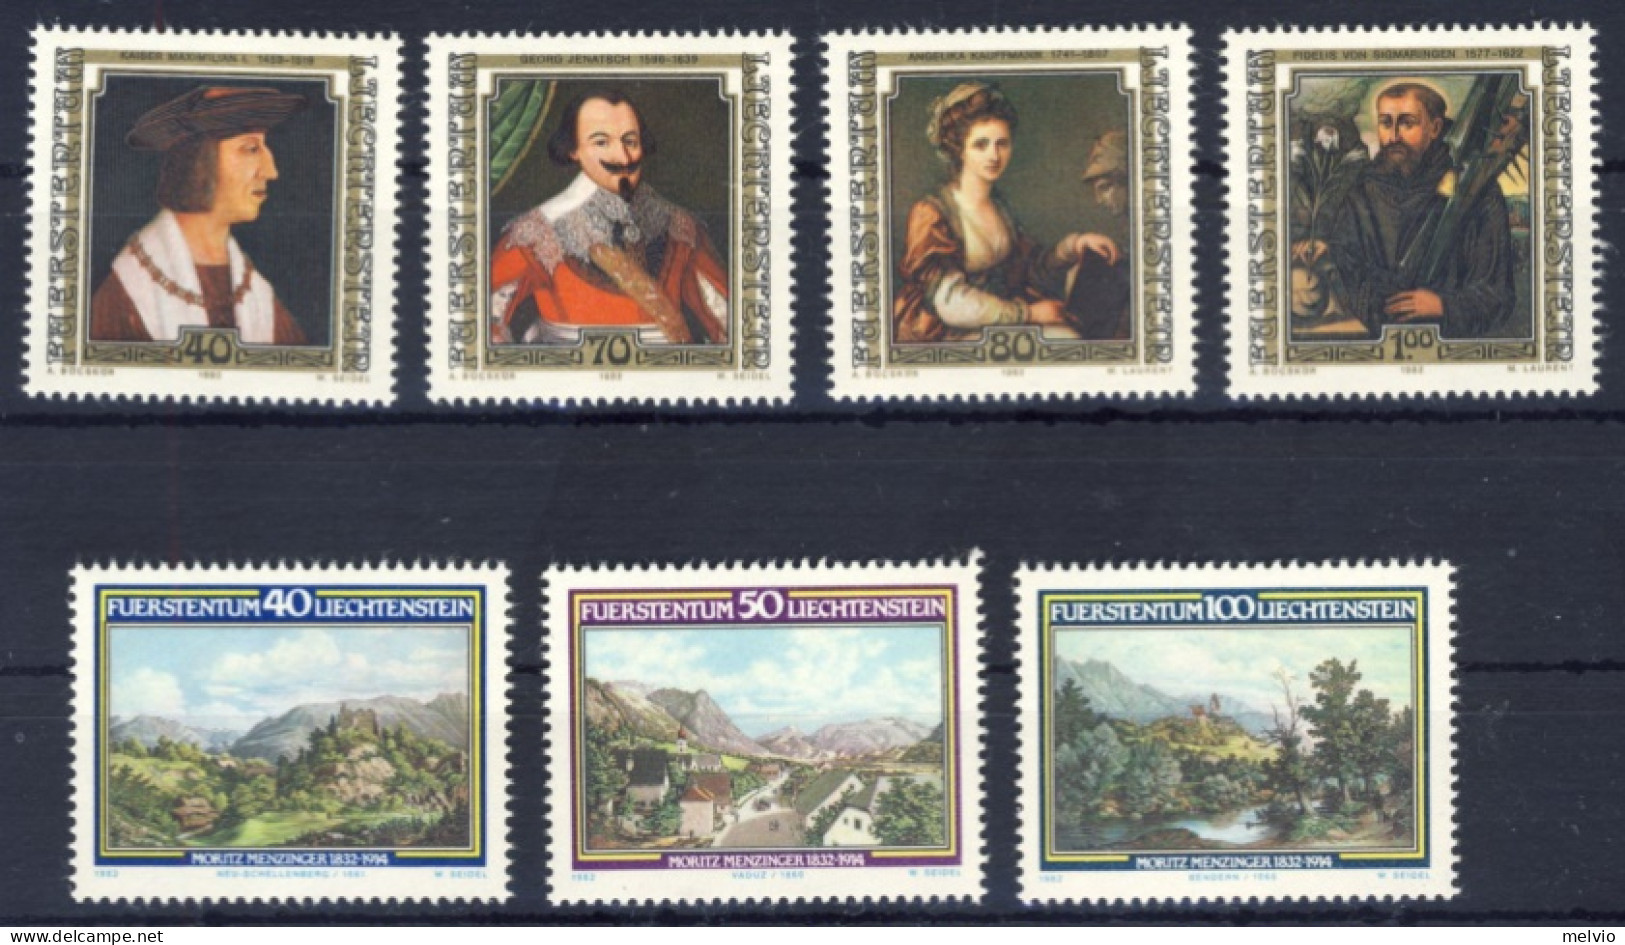 1982-Liechtenstein (MNH=**) 2 Serie 7 Valori Dipinti,ritratti Di Famosi Visitato - Ungebraucht